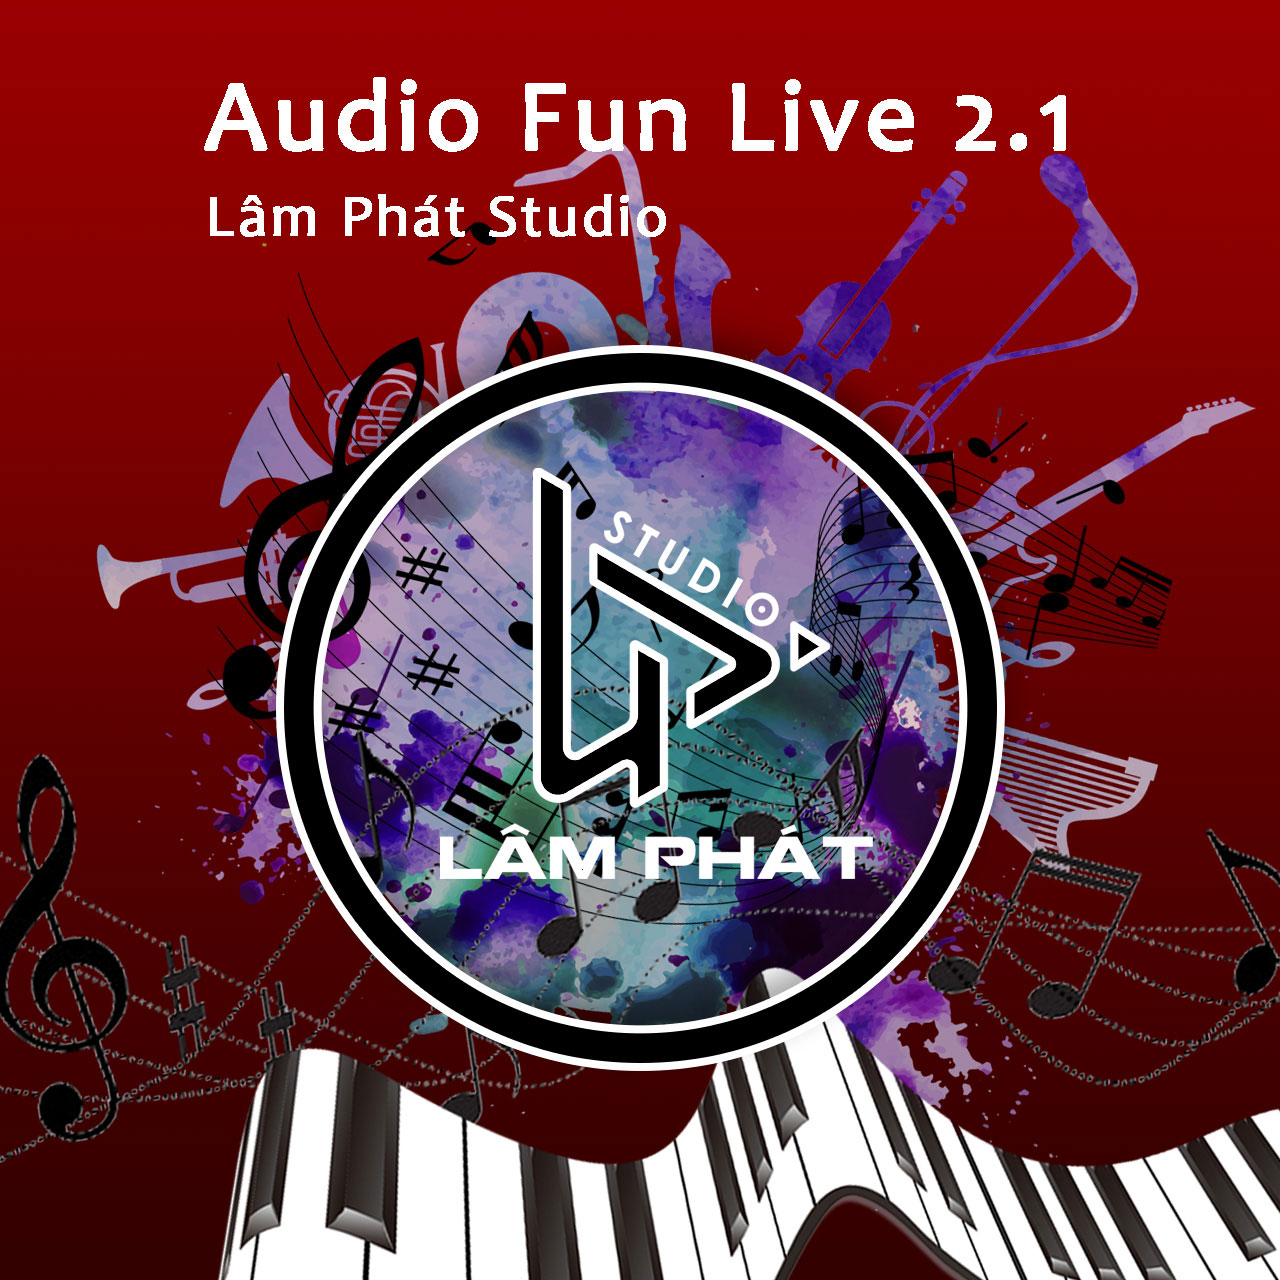 Hieu ung tieng cuoi khi Livestream Audio Fun Live 2.1